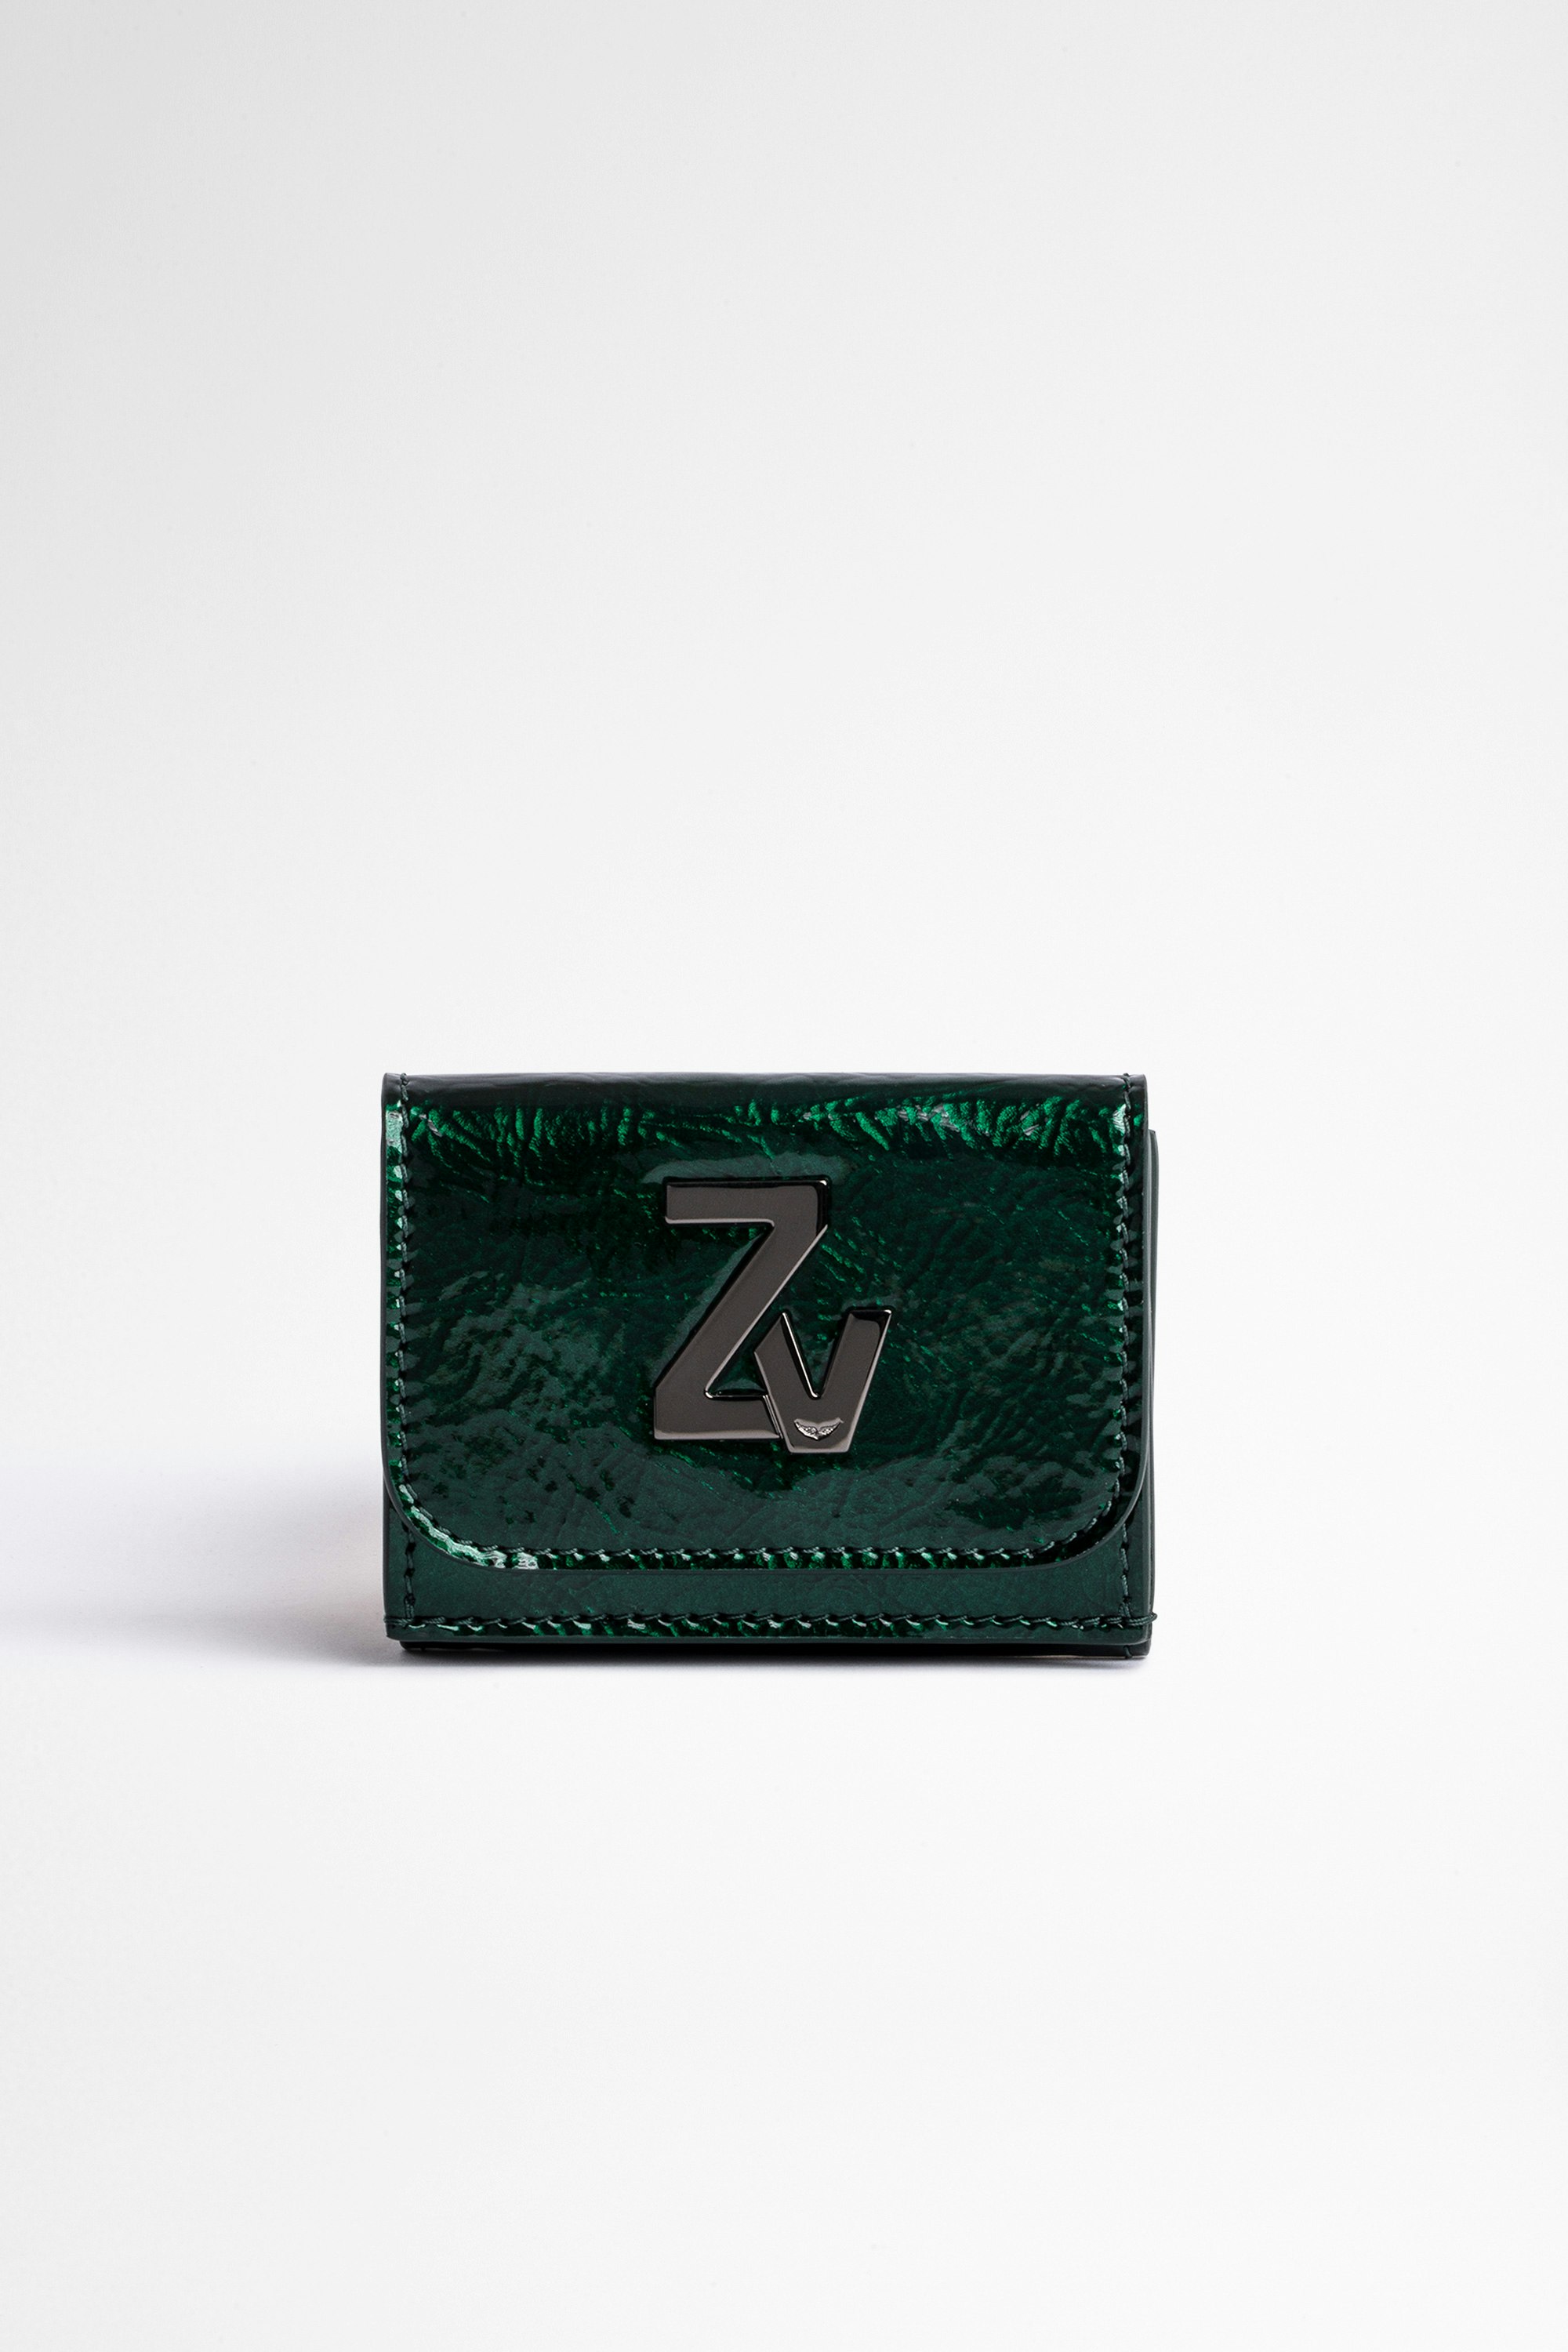 Portemonnaie ZV Initiale Le Trifold Faltbares Mini-Portemonnaie aus grünem metallisierten Leder für Damen